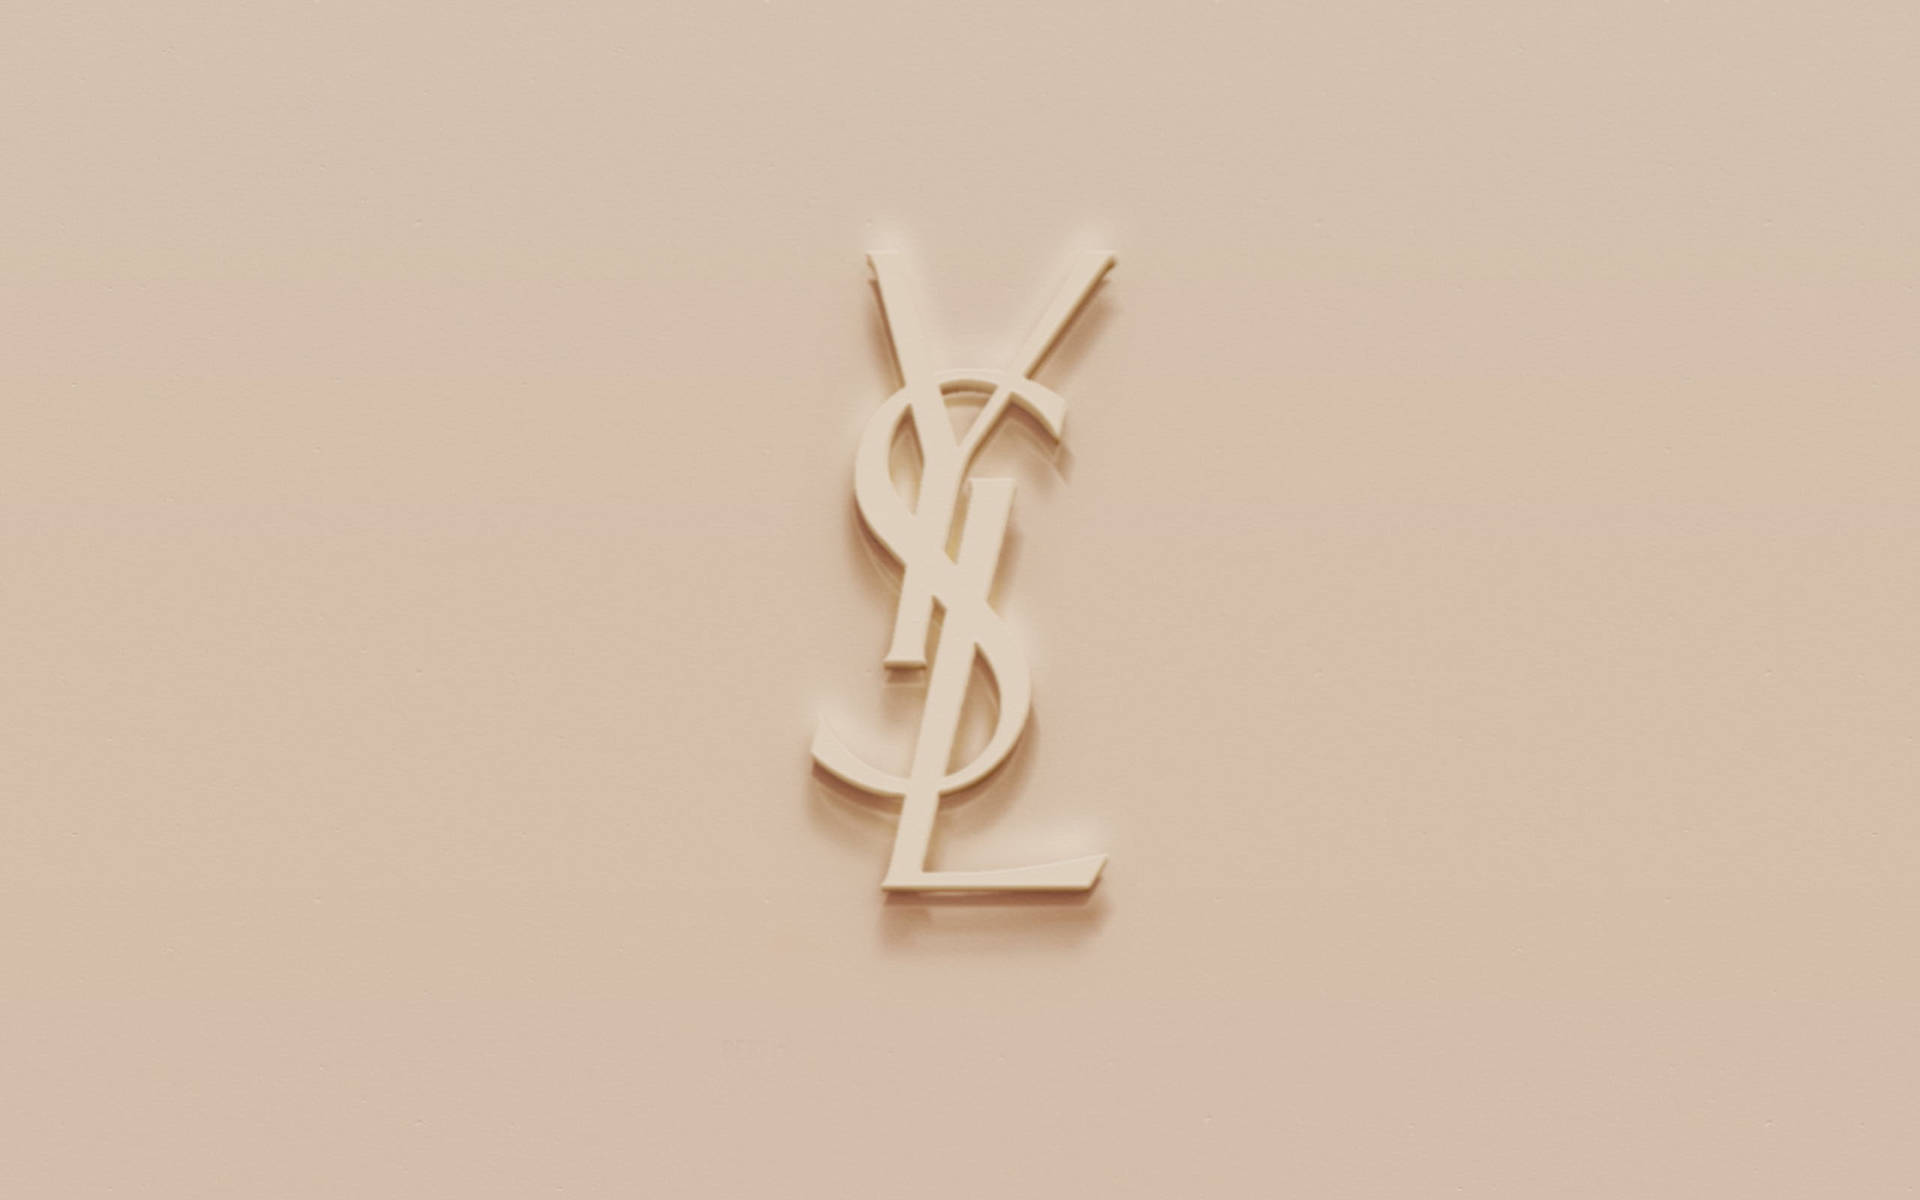 Ysllogo Beige Art (logotipo De Ysl En Color Beige, Arte) Fondo de pantalla